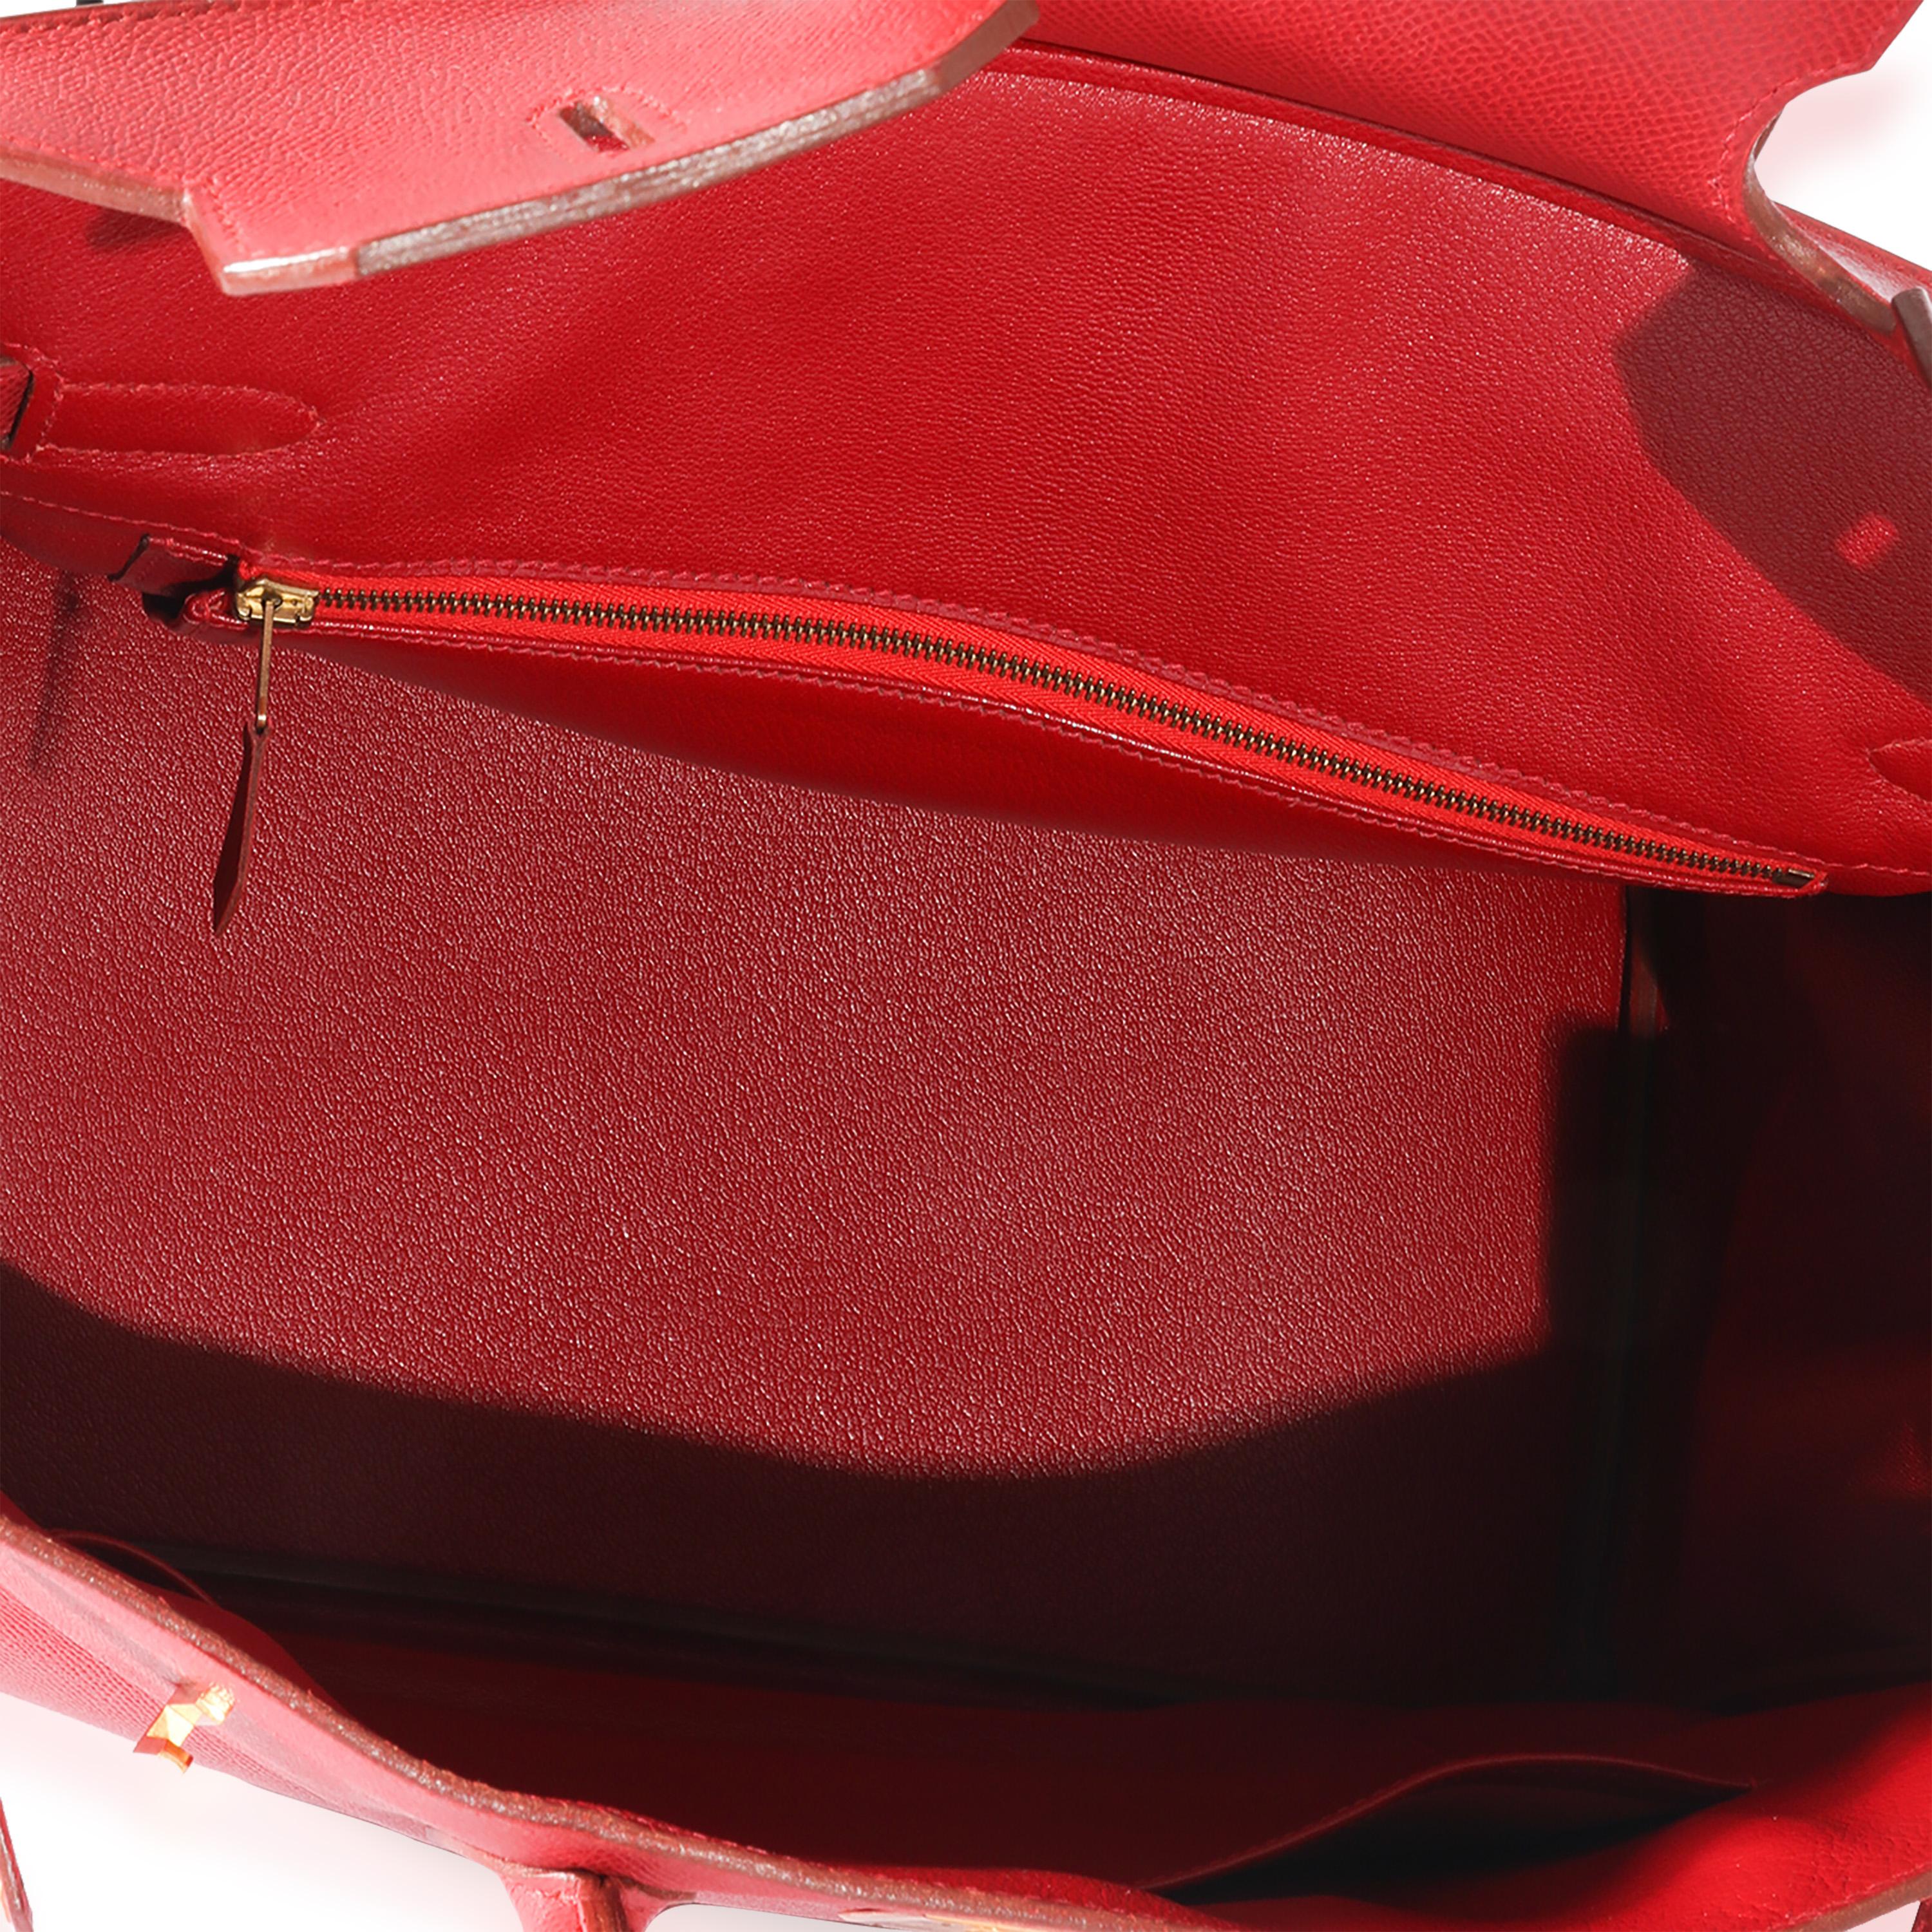 Listing Title: Hermès Vintage Rouge Vif Courchevel Birkin 35 GHW
SKU: 126316
Condition: Pre-owned 
Condition Description: The elusive Birkin bag from Hermès was designed after then-artistic director, Jean-Louis Dumas, was sat next to Jane Birkin on